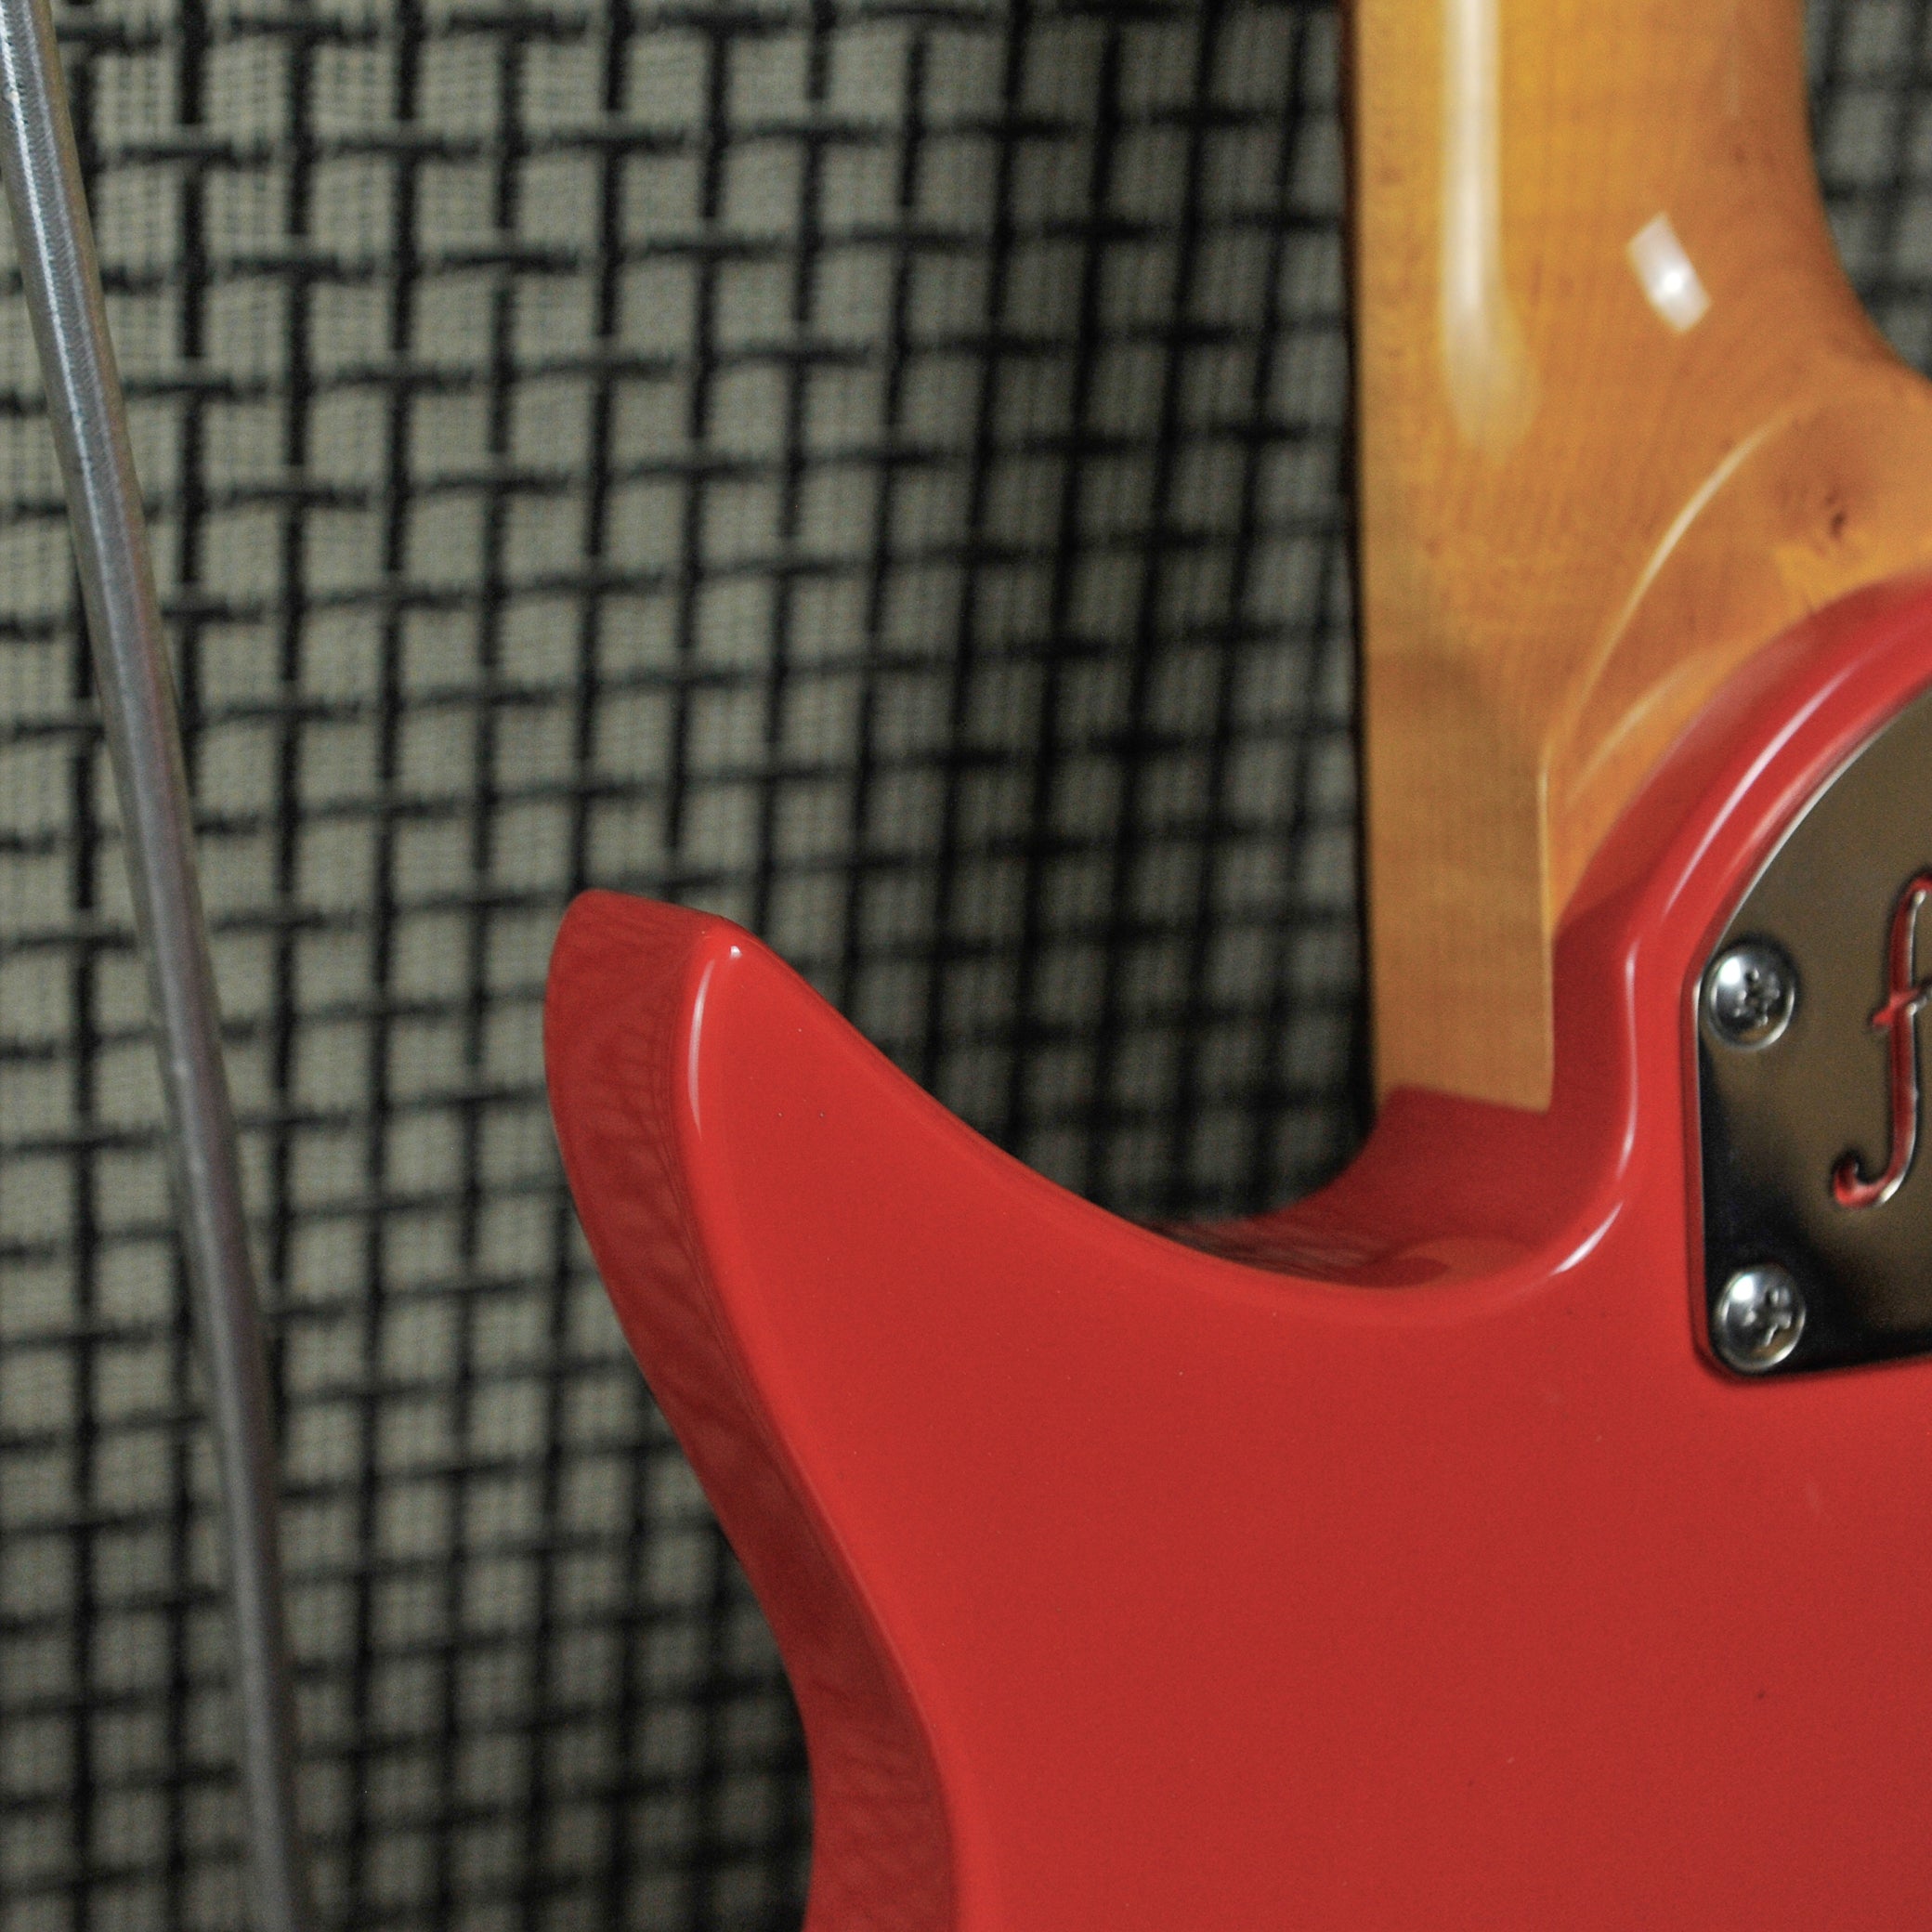 Fano Guitars - Alt de Facto RB6, Fiesta Red  2014  - Used